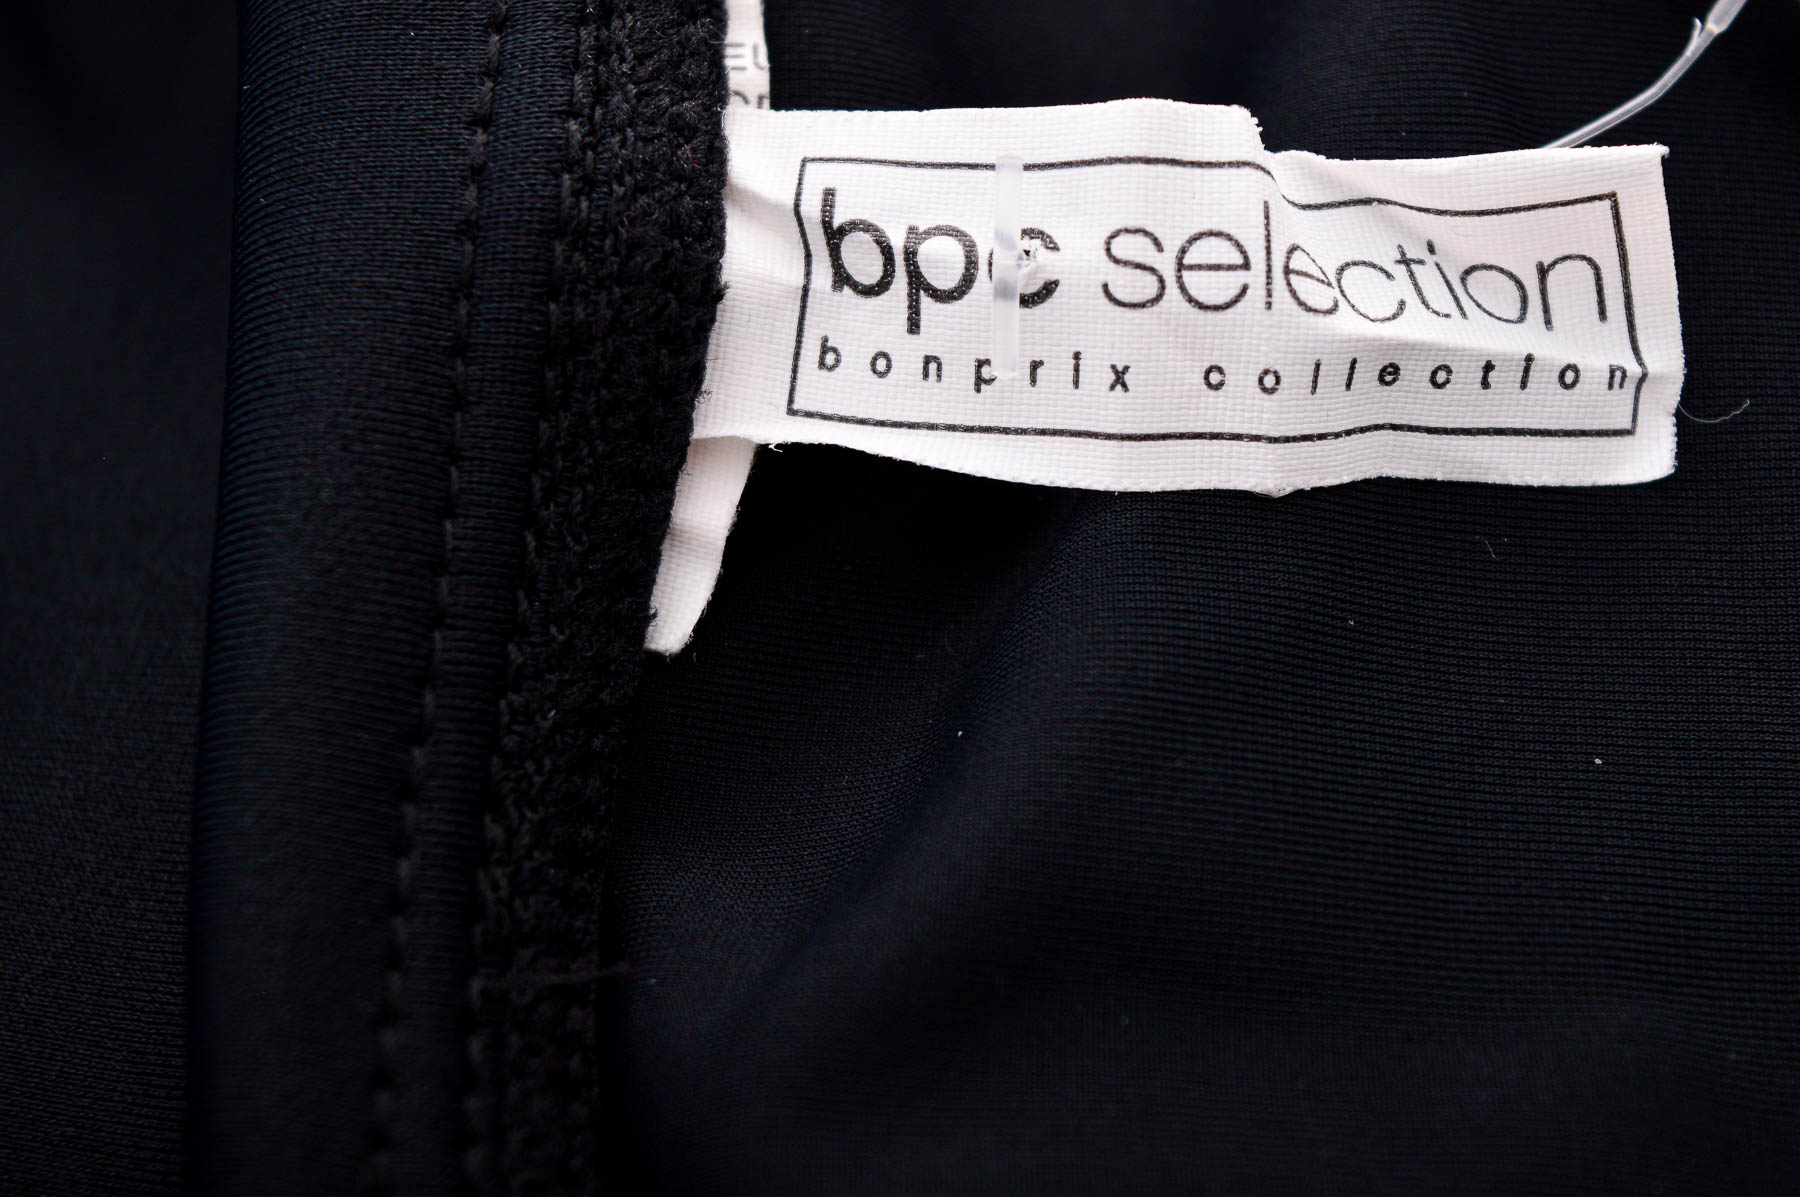 Skirt - pants - Bpc selection bonprix collection - 2